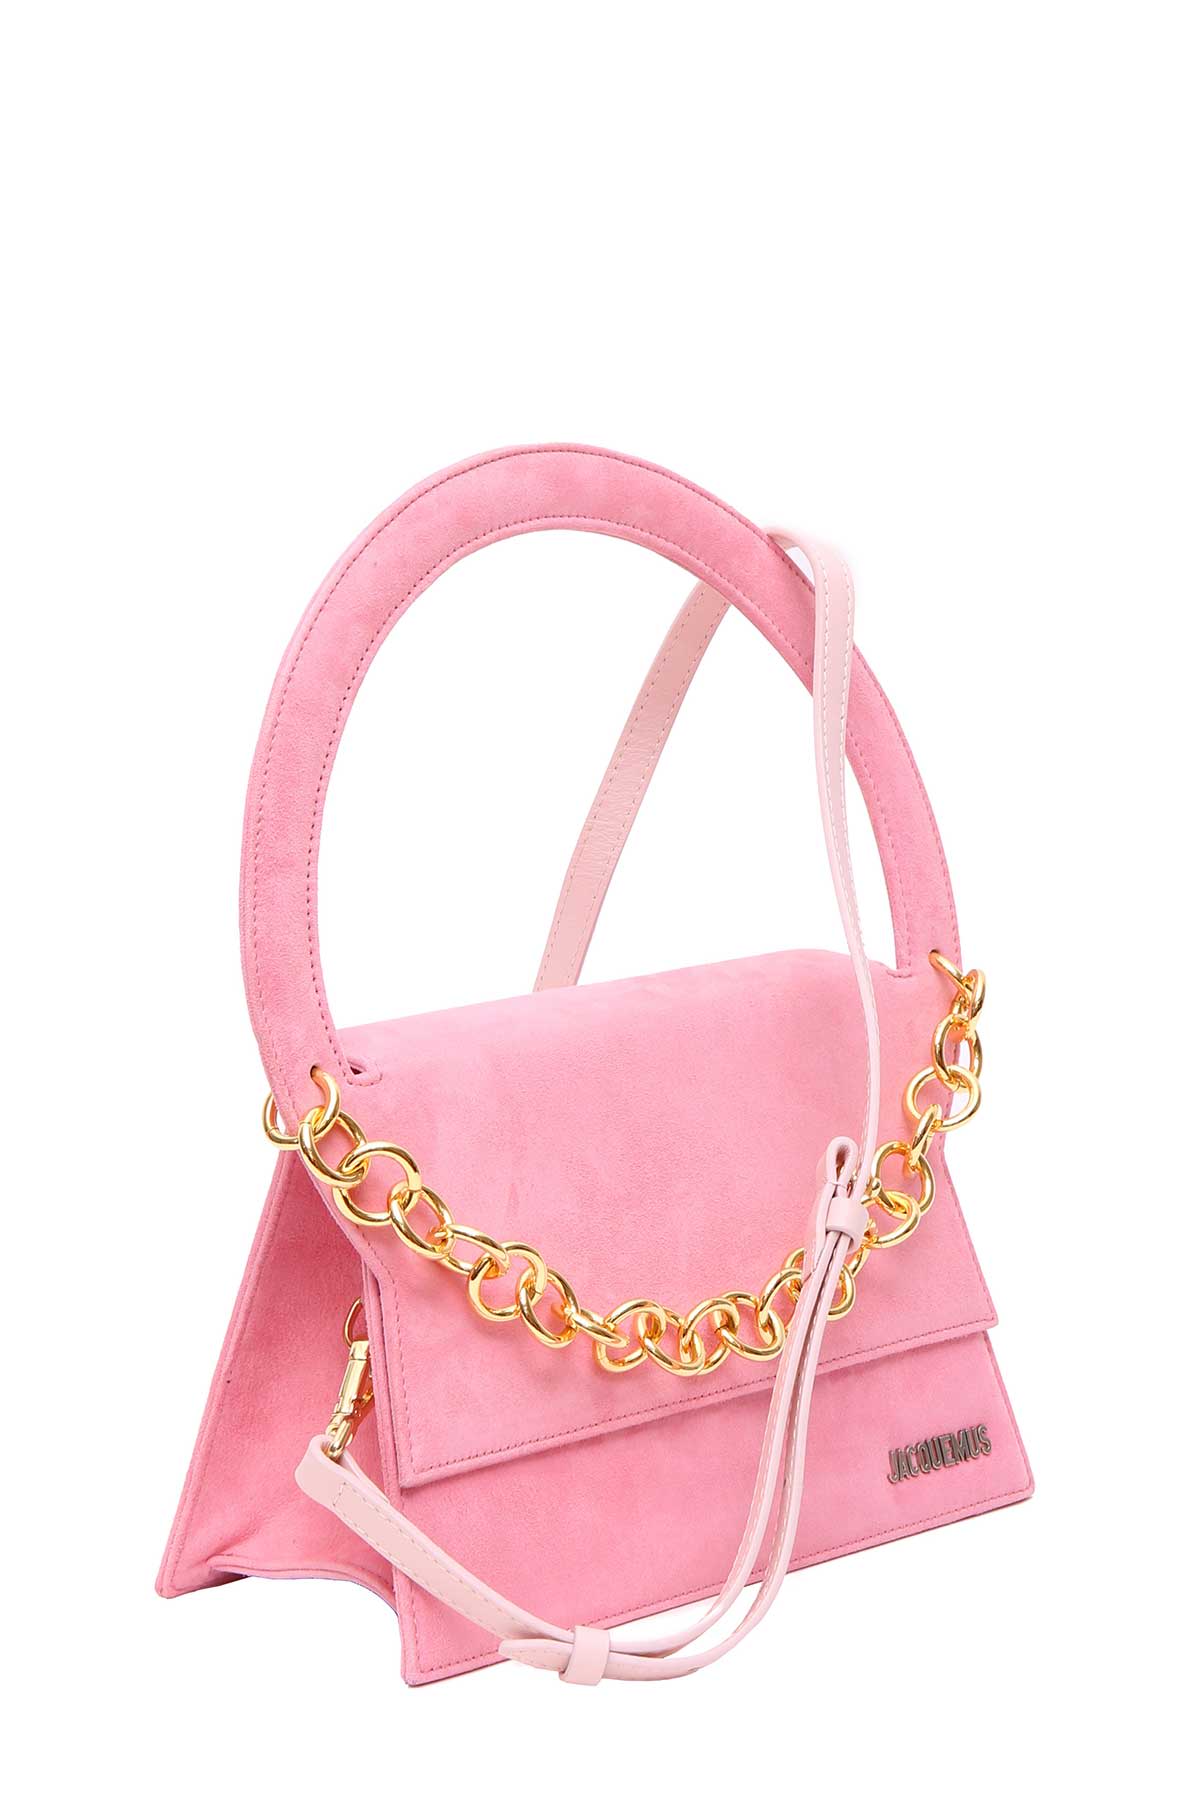 Jacquemus - Jacquemus Le Sac Rond Handbag - Pink, Women's Totes | Italist